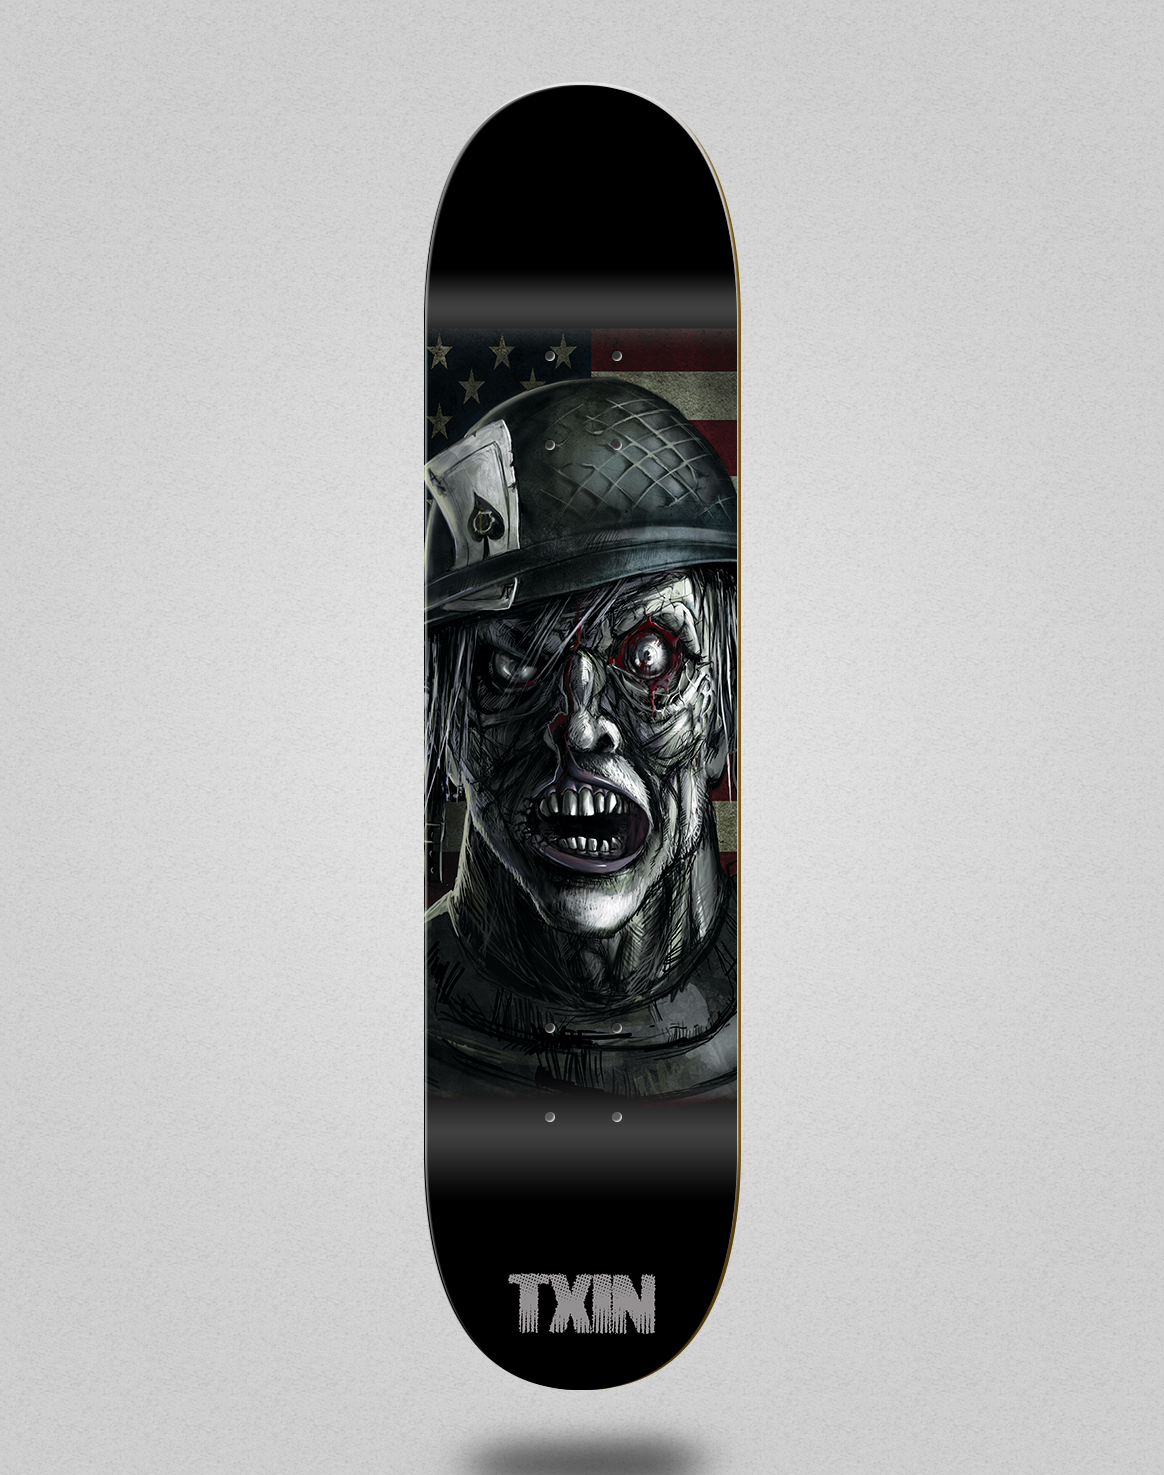 Txin skateboard deck – Zombie Nation